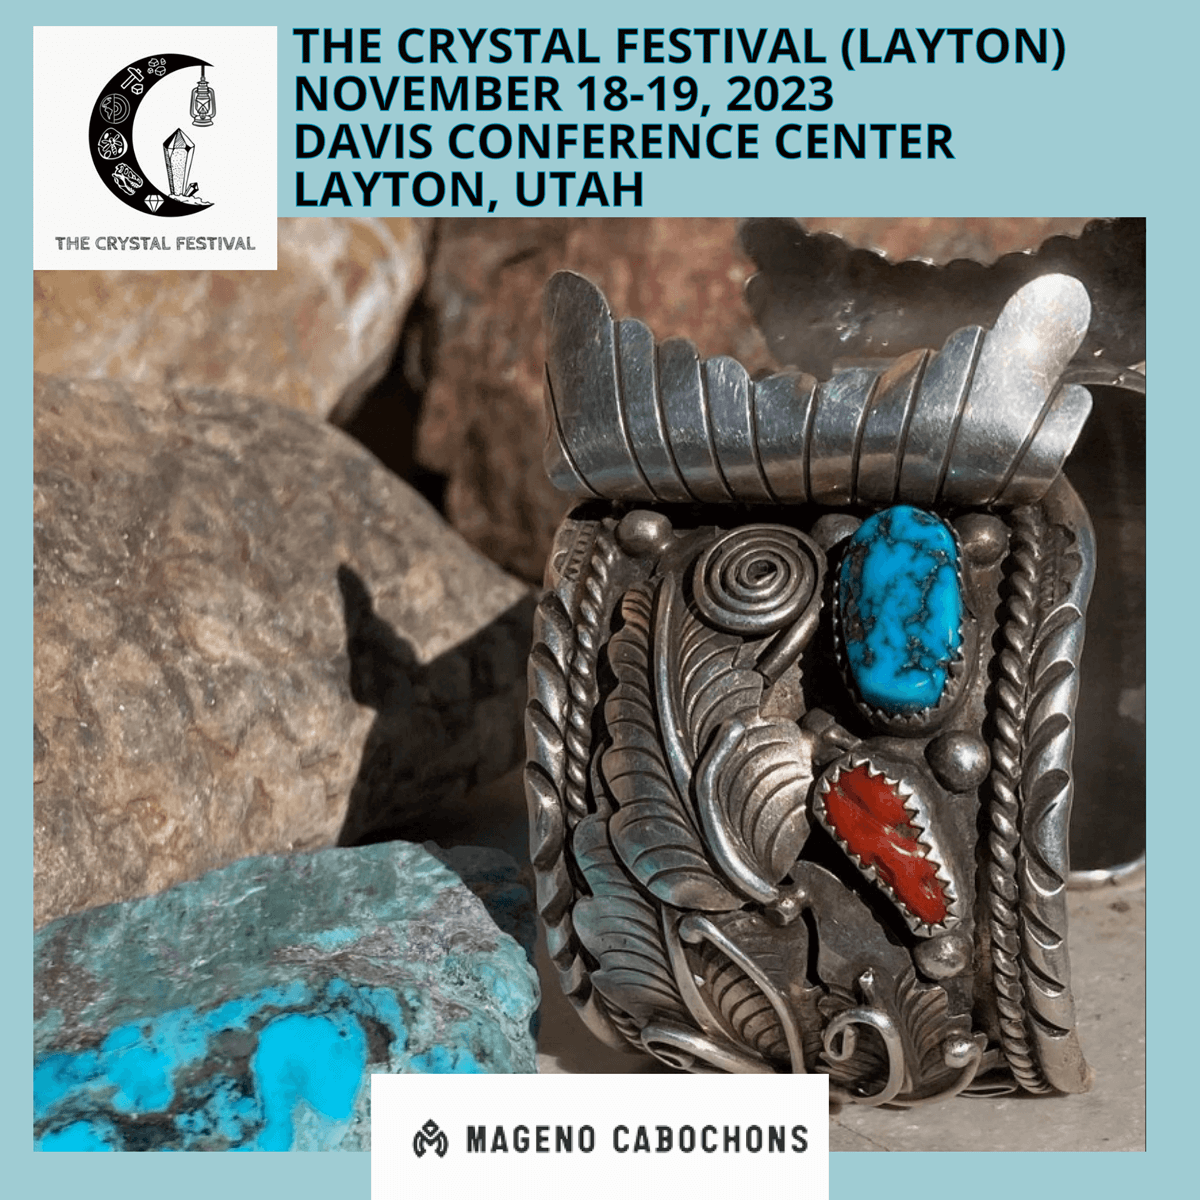 The Crystal Festival - Layton 2023